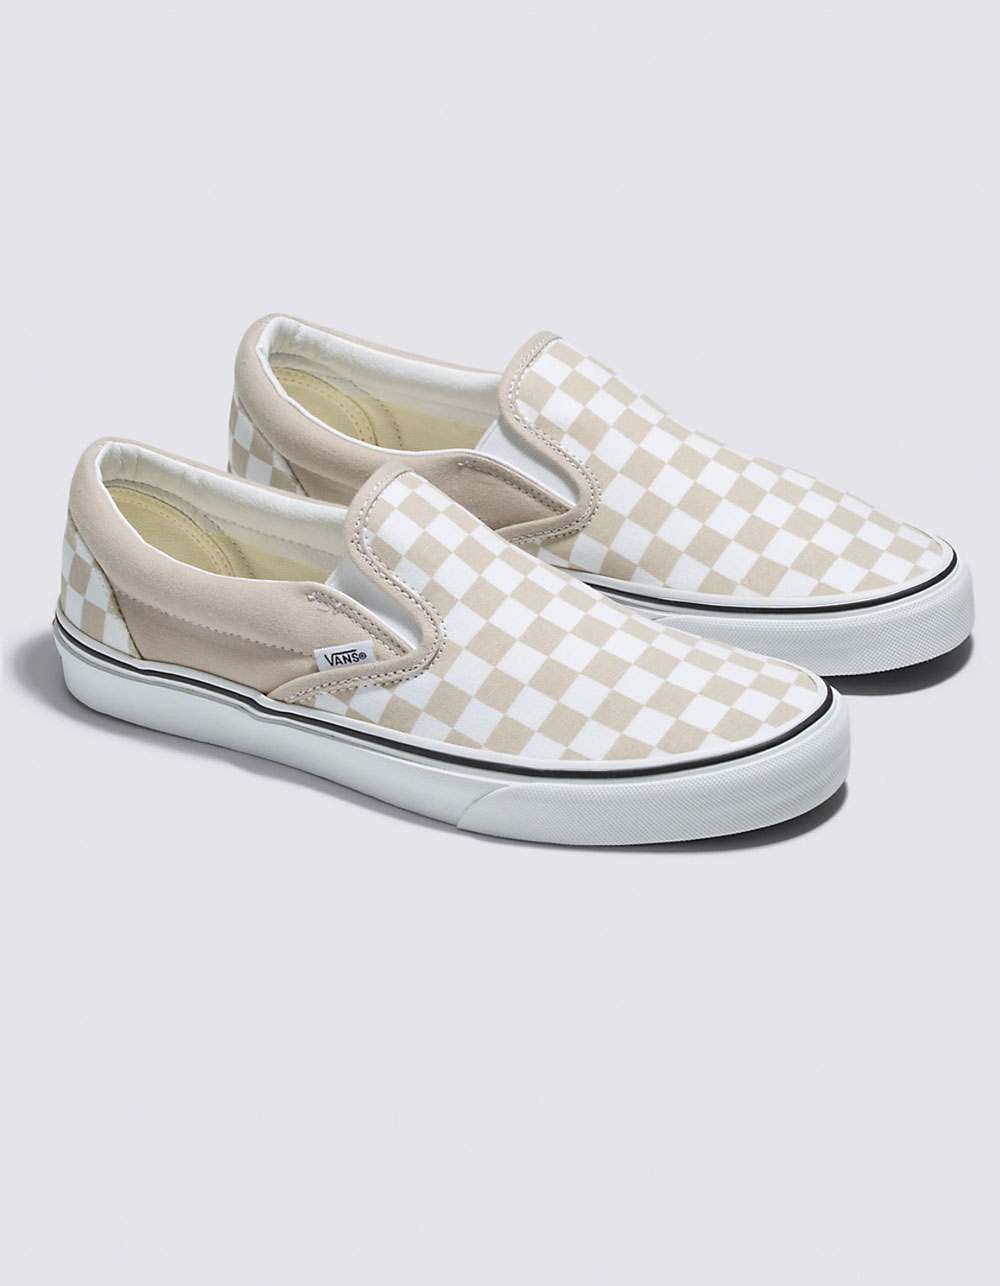 VANS Checkerboard Classic Shoes - TAN |